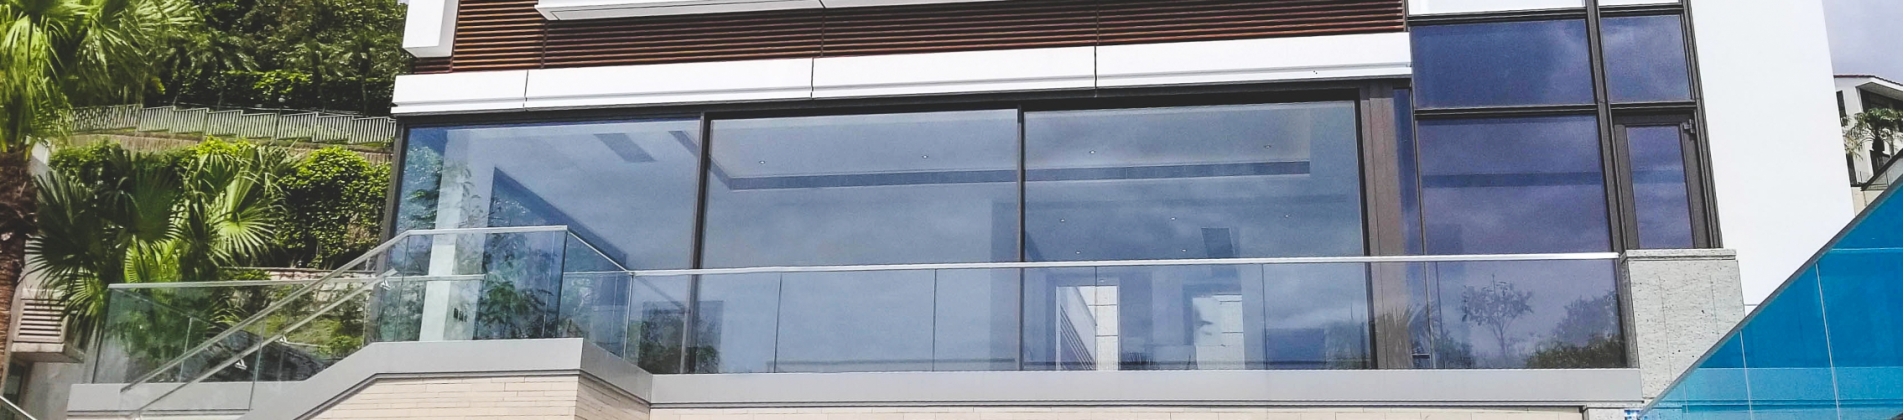 SP-glass balustrade, glass wall and window